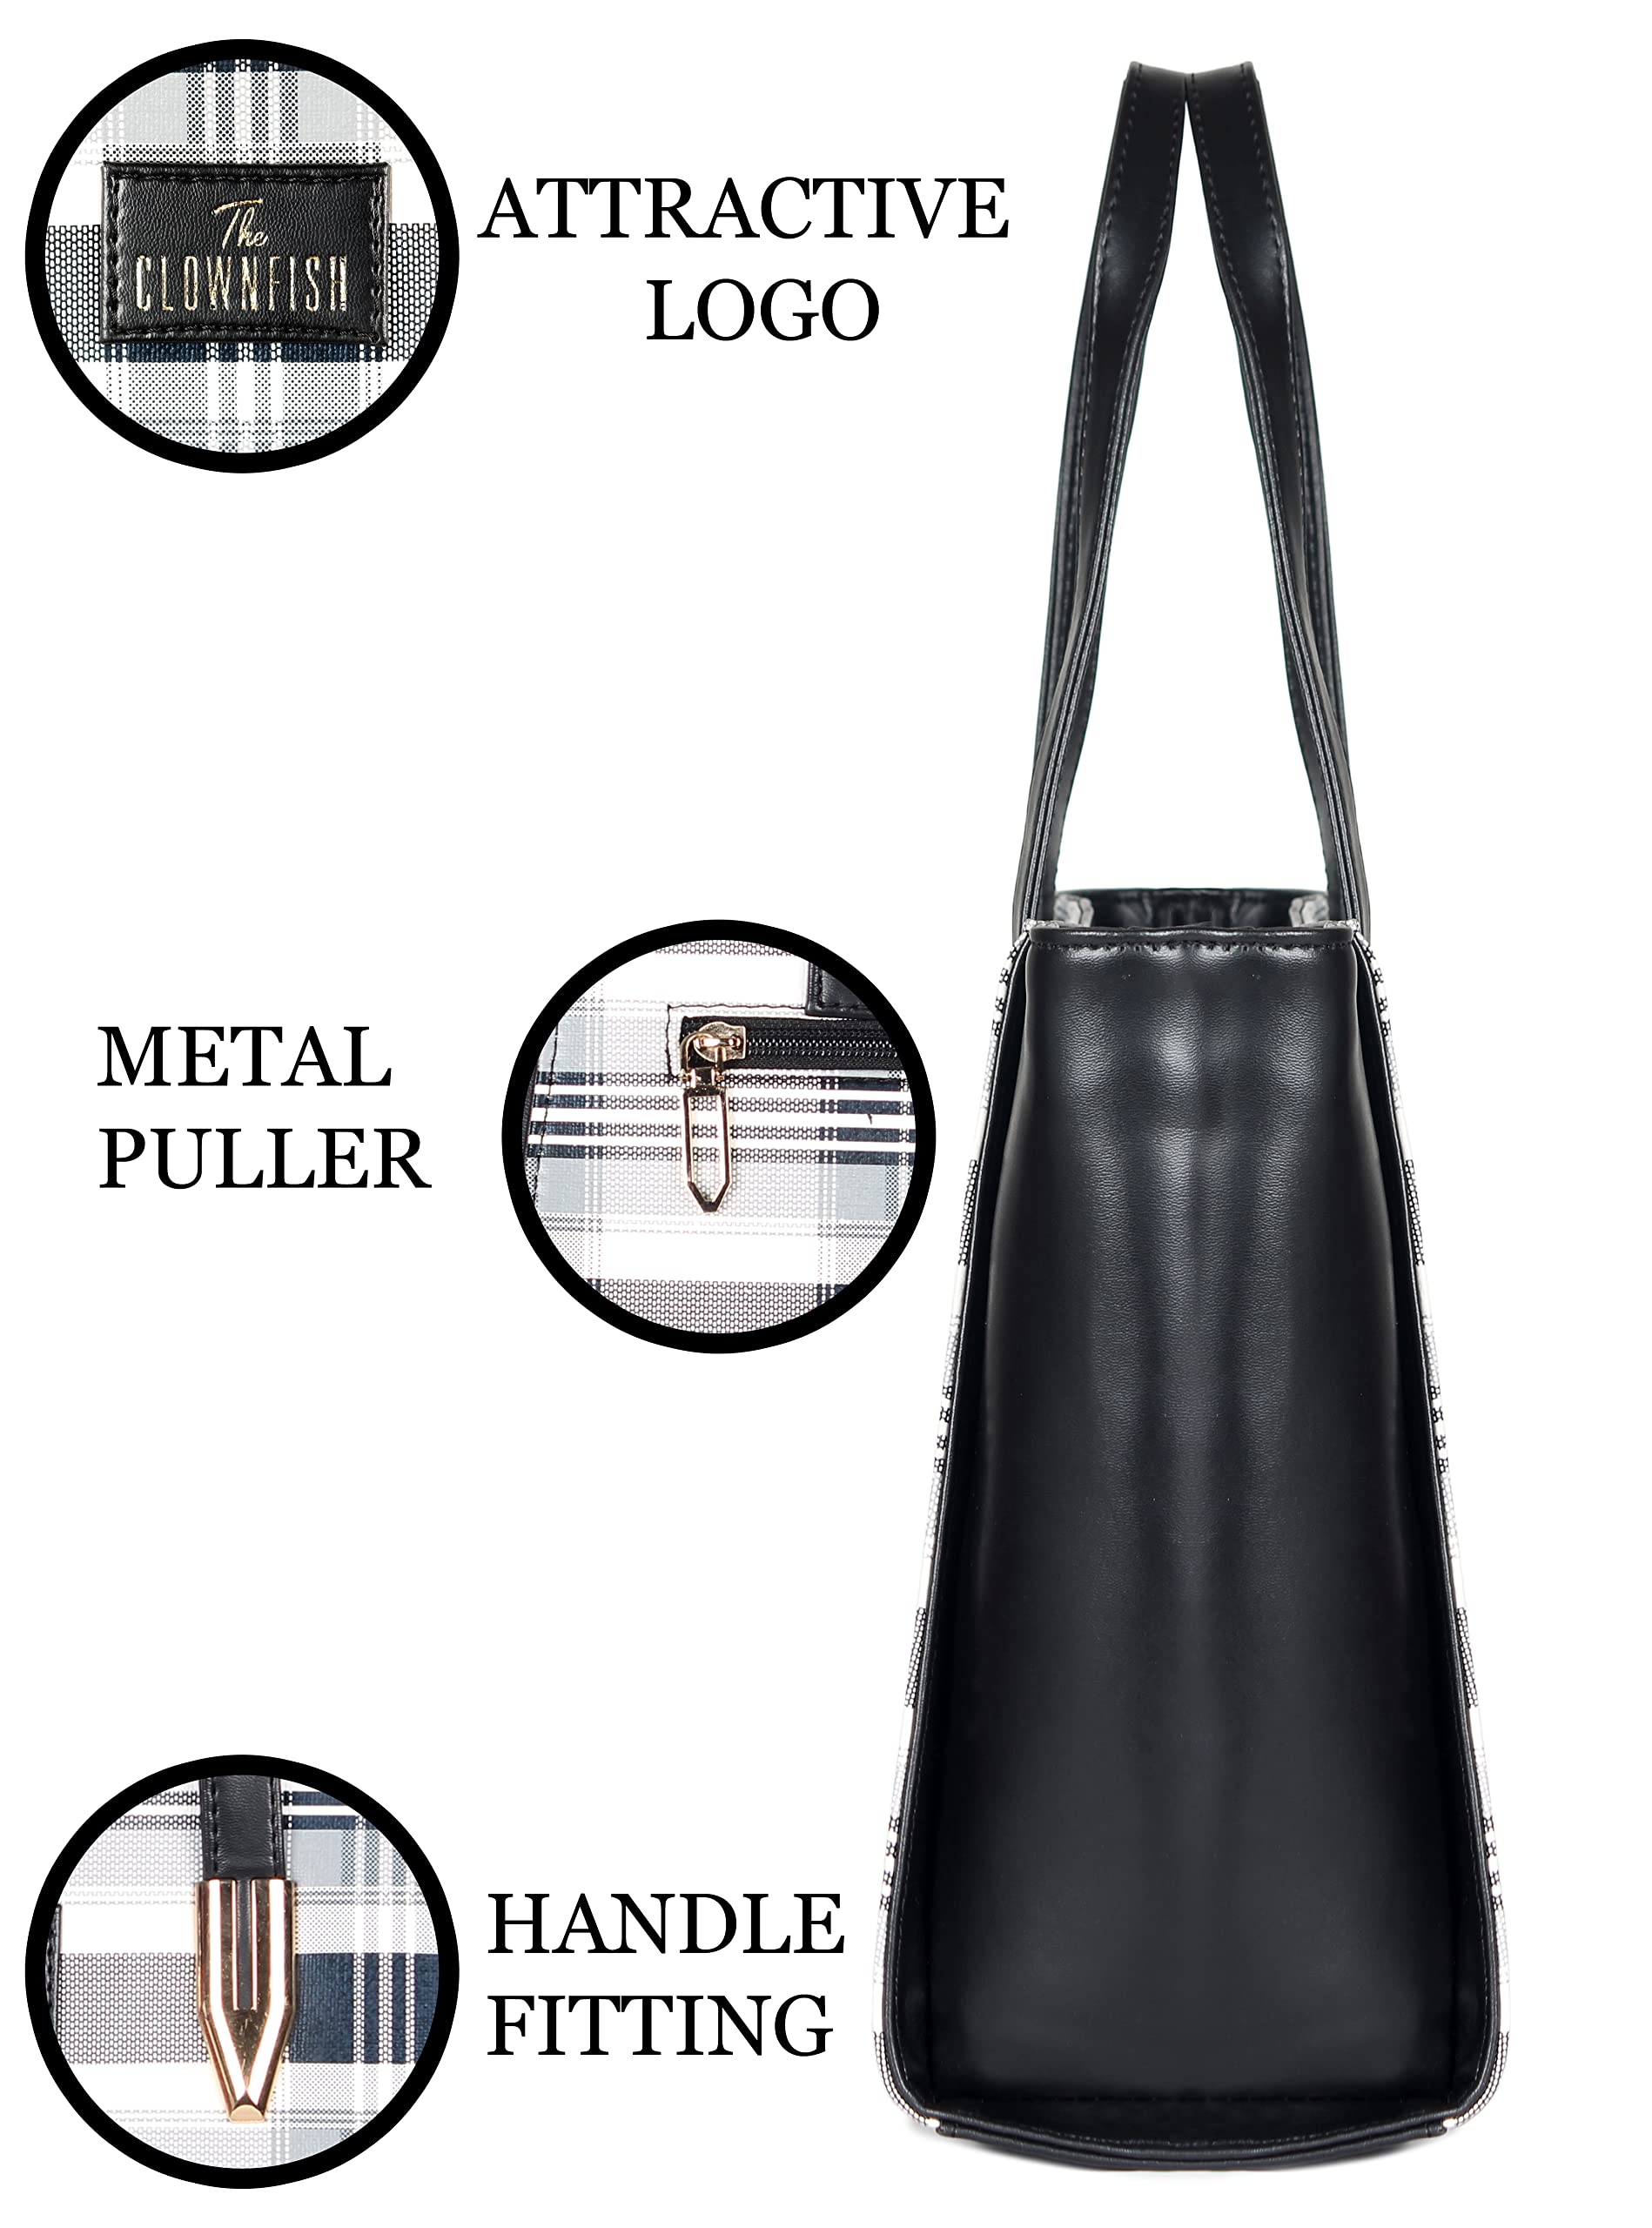 The Clownfish Agnes Handbag for Women Office Bag Ladies Shoulder Bag Tote for Women College Girls-Checks Design (Black)